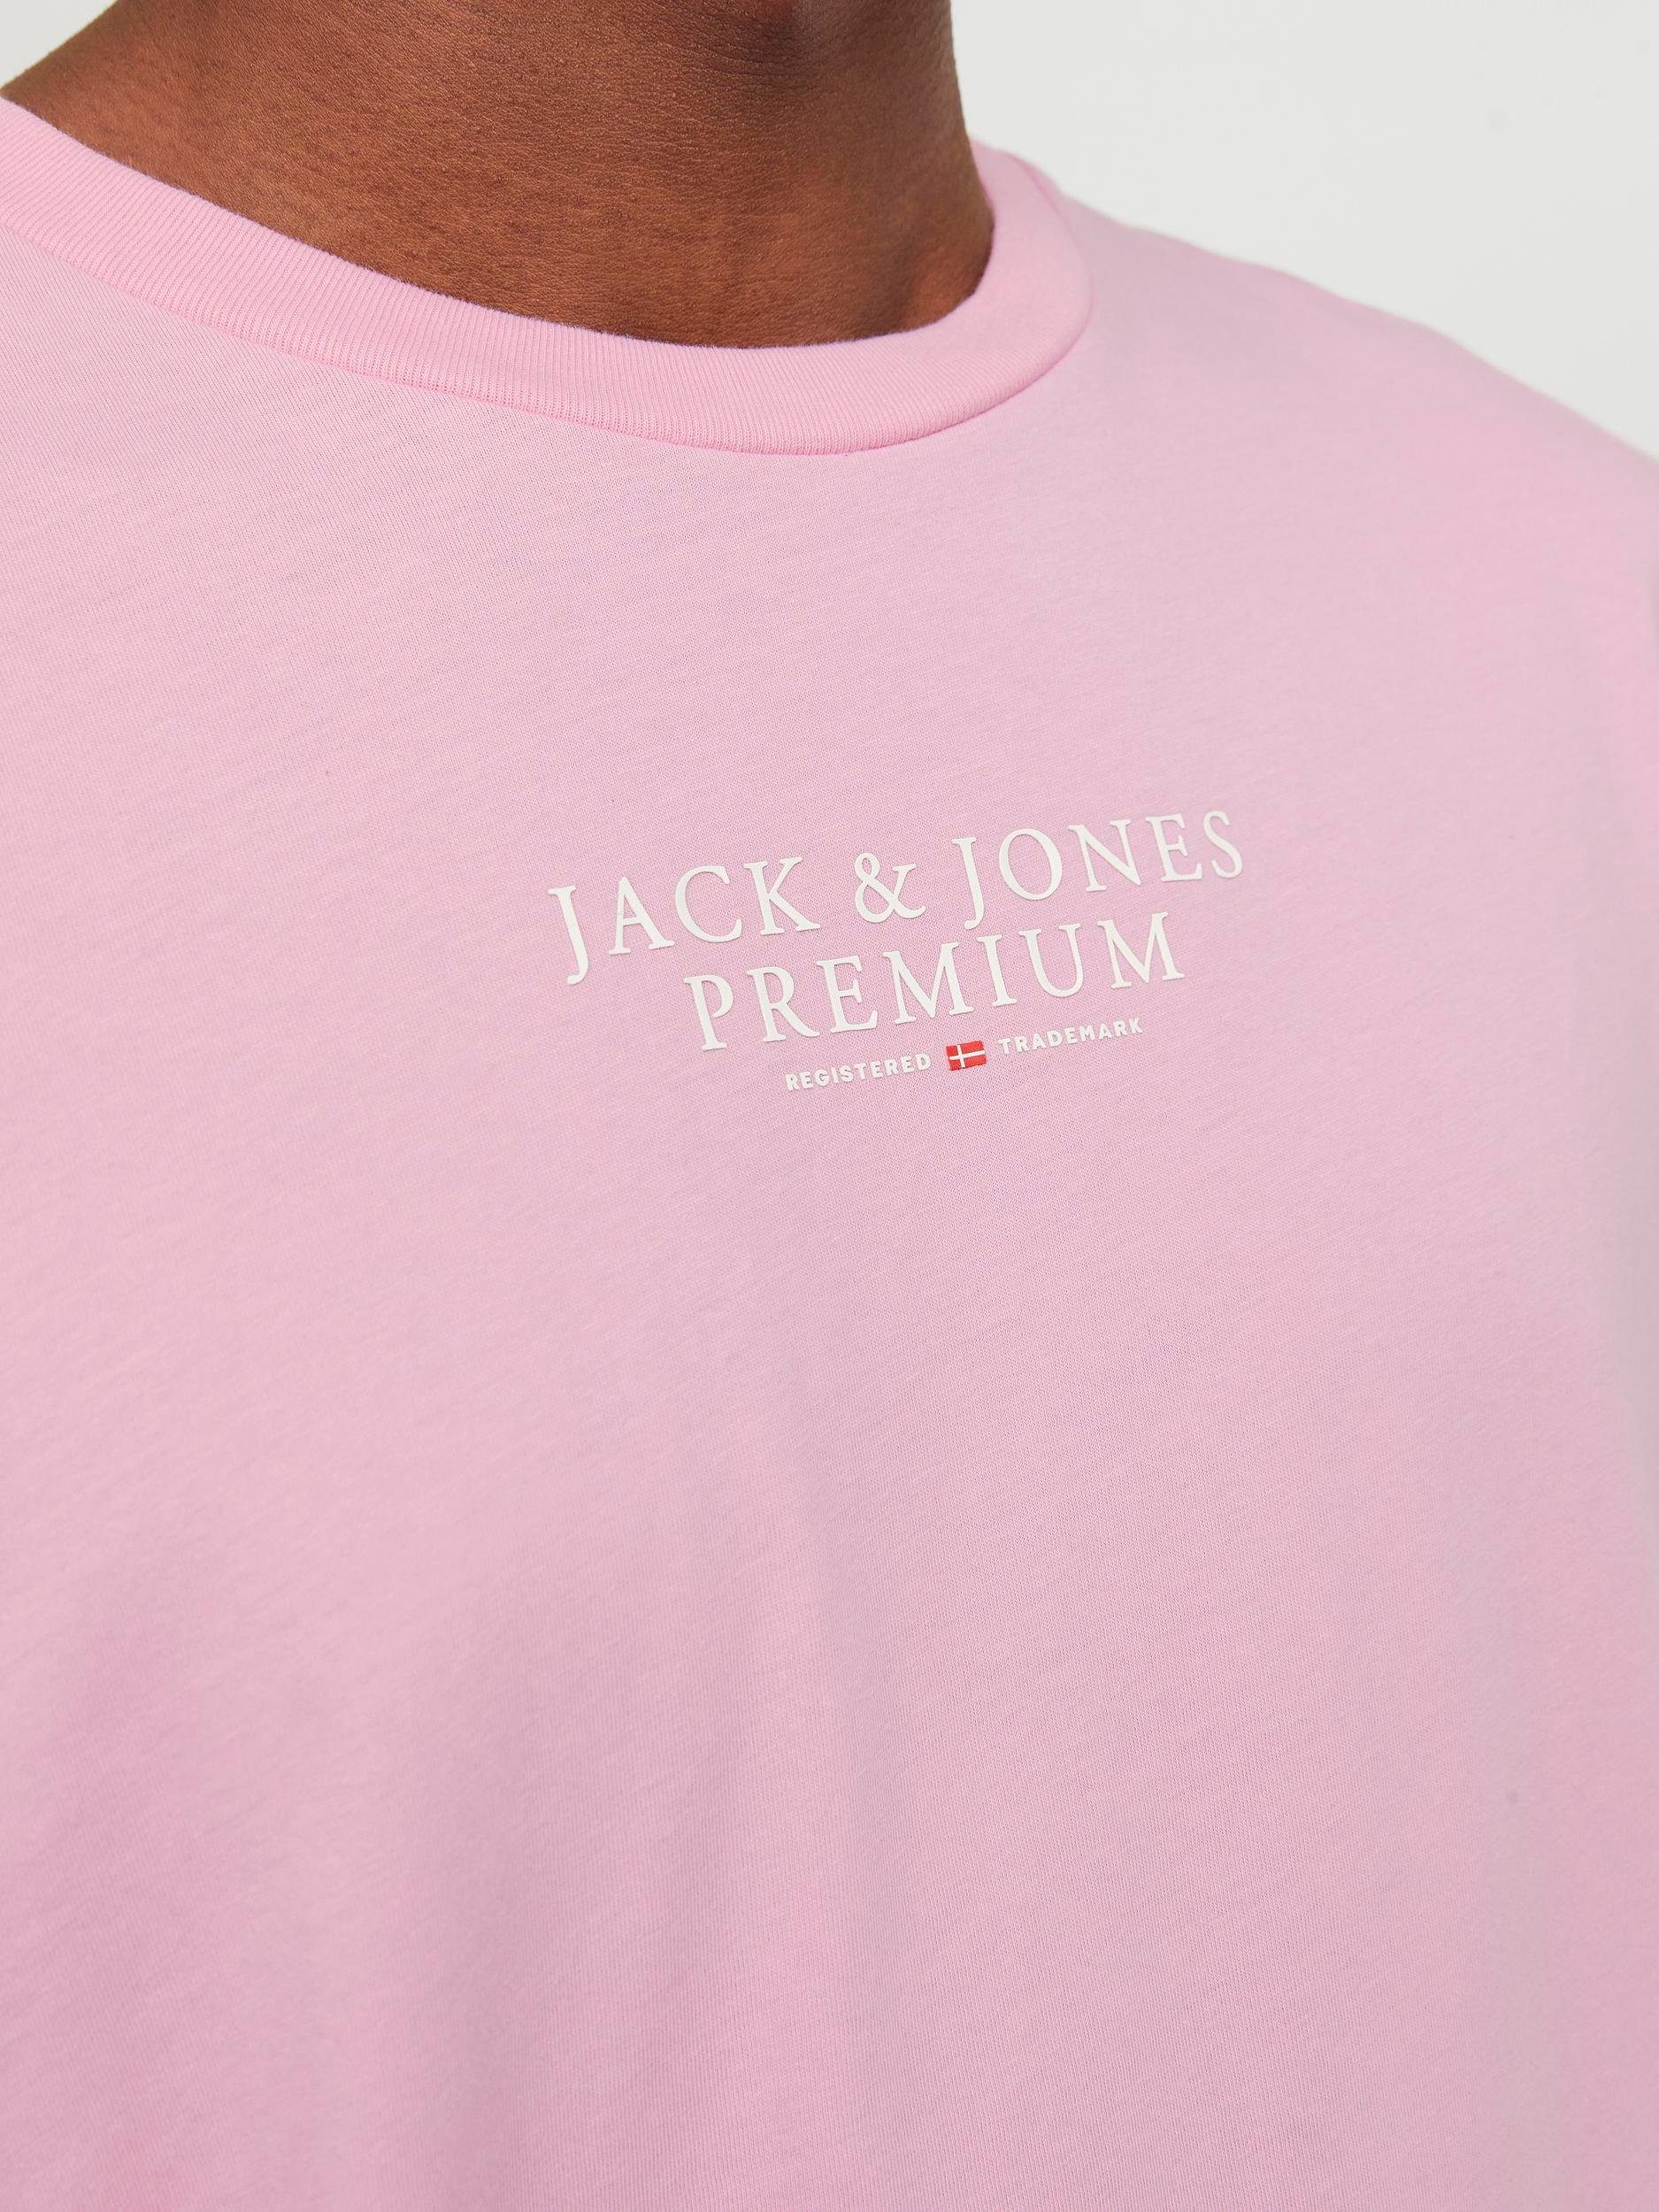 JPRBLUARCHIE Jones Rundhalsshirt CREW Pink NECK Prism & TEE Jack